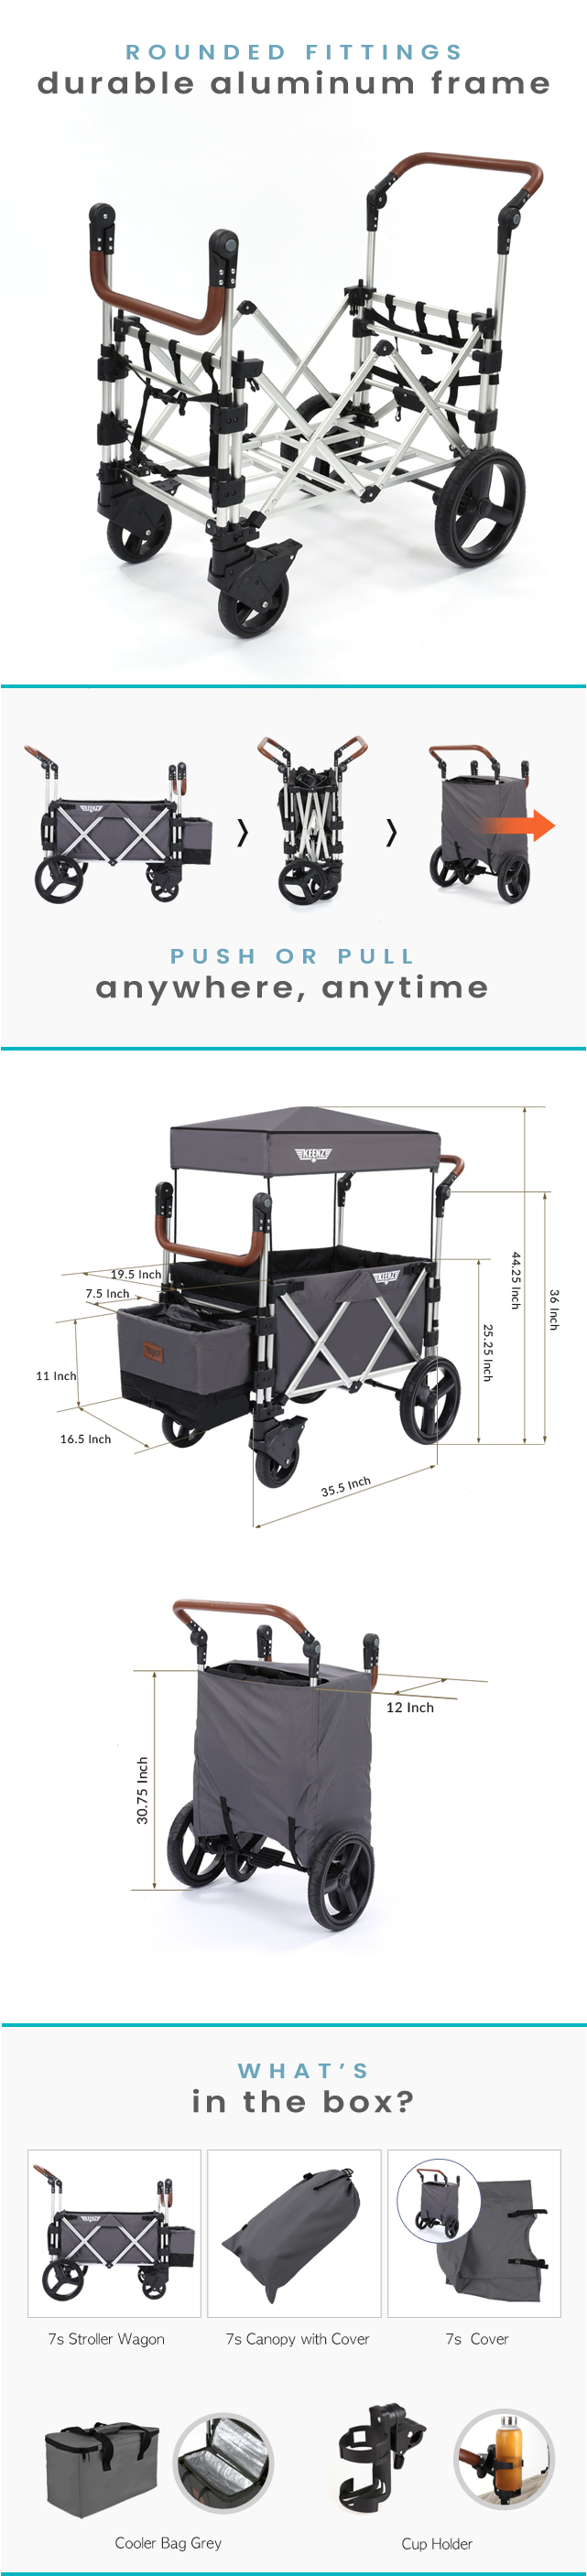 Keens 7s Stroller Wagon Description 3